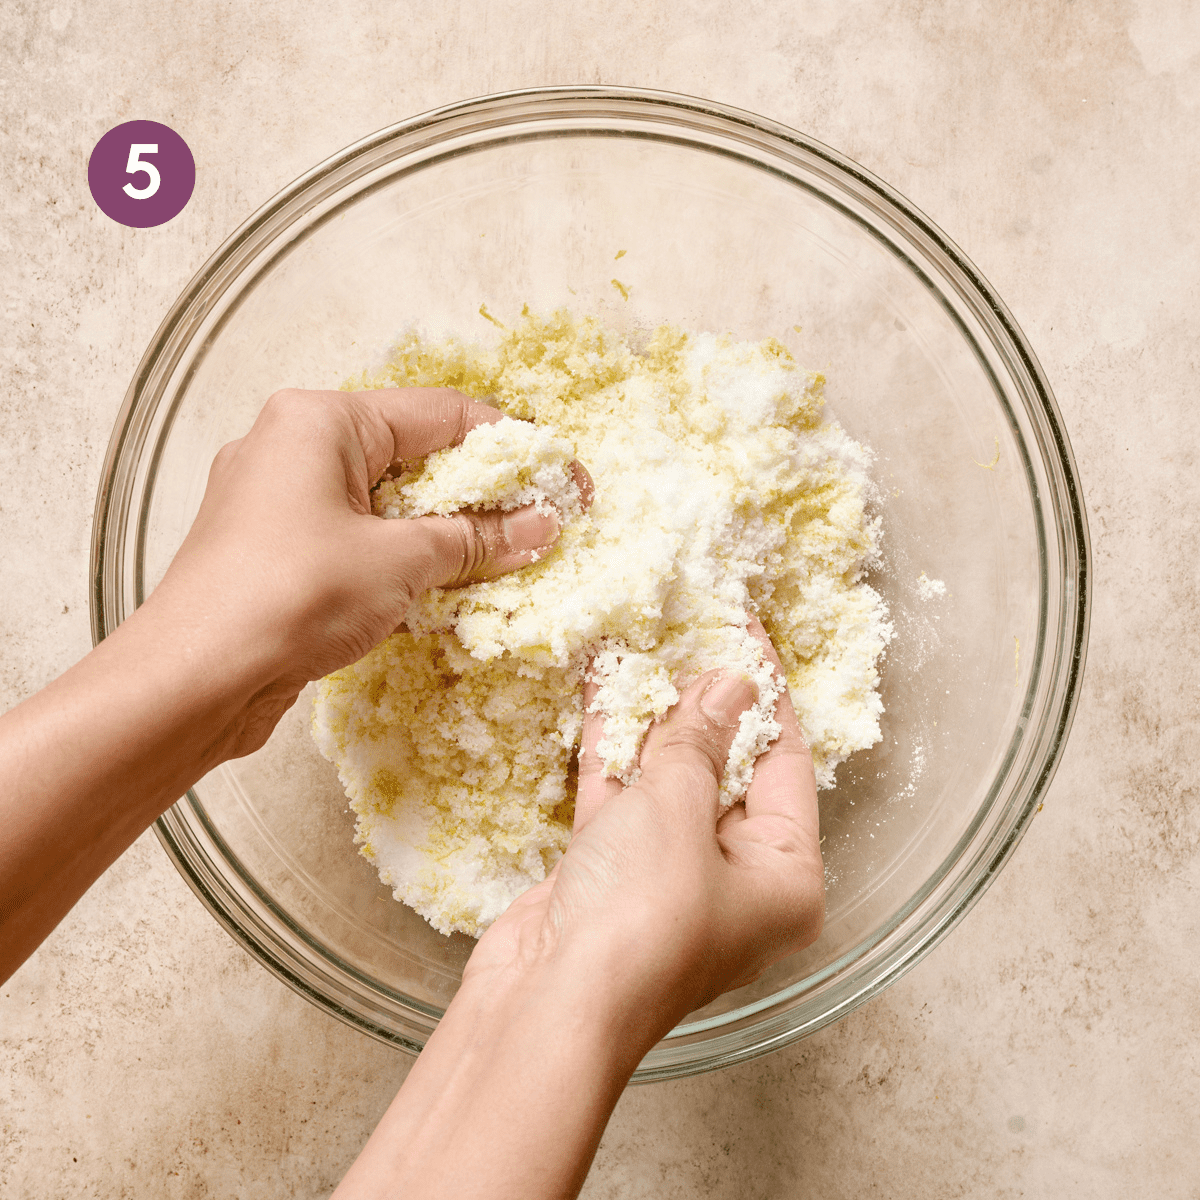 woman's hands massaging lemon zest into sugar in a glass bowl for a vegan lemon cake.